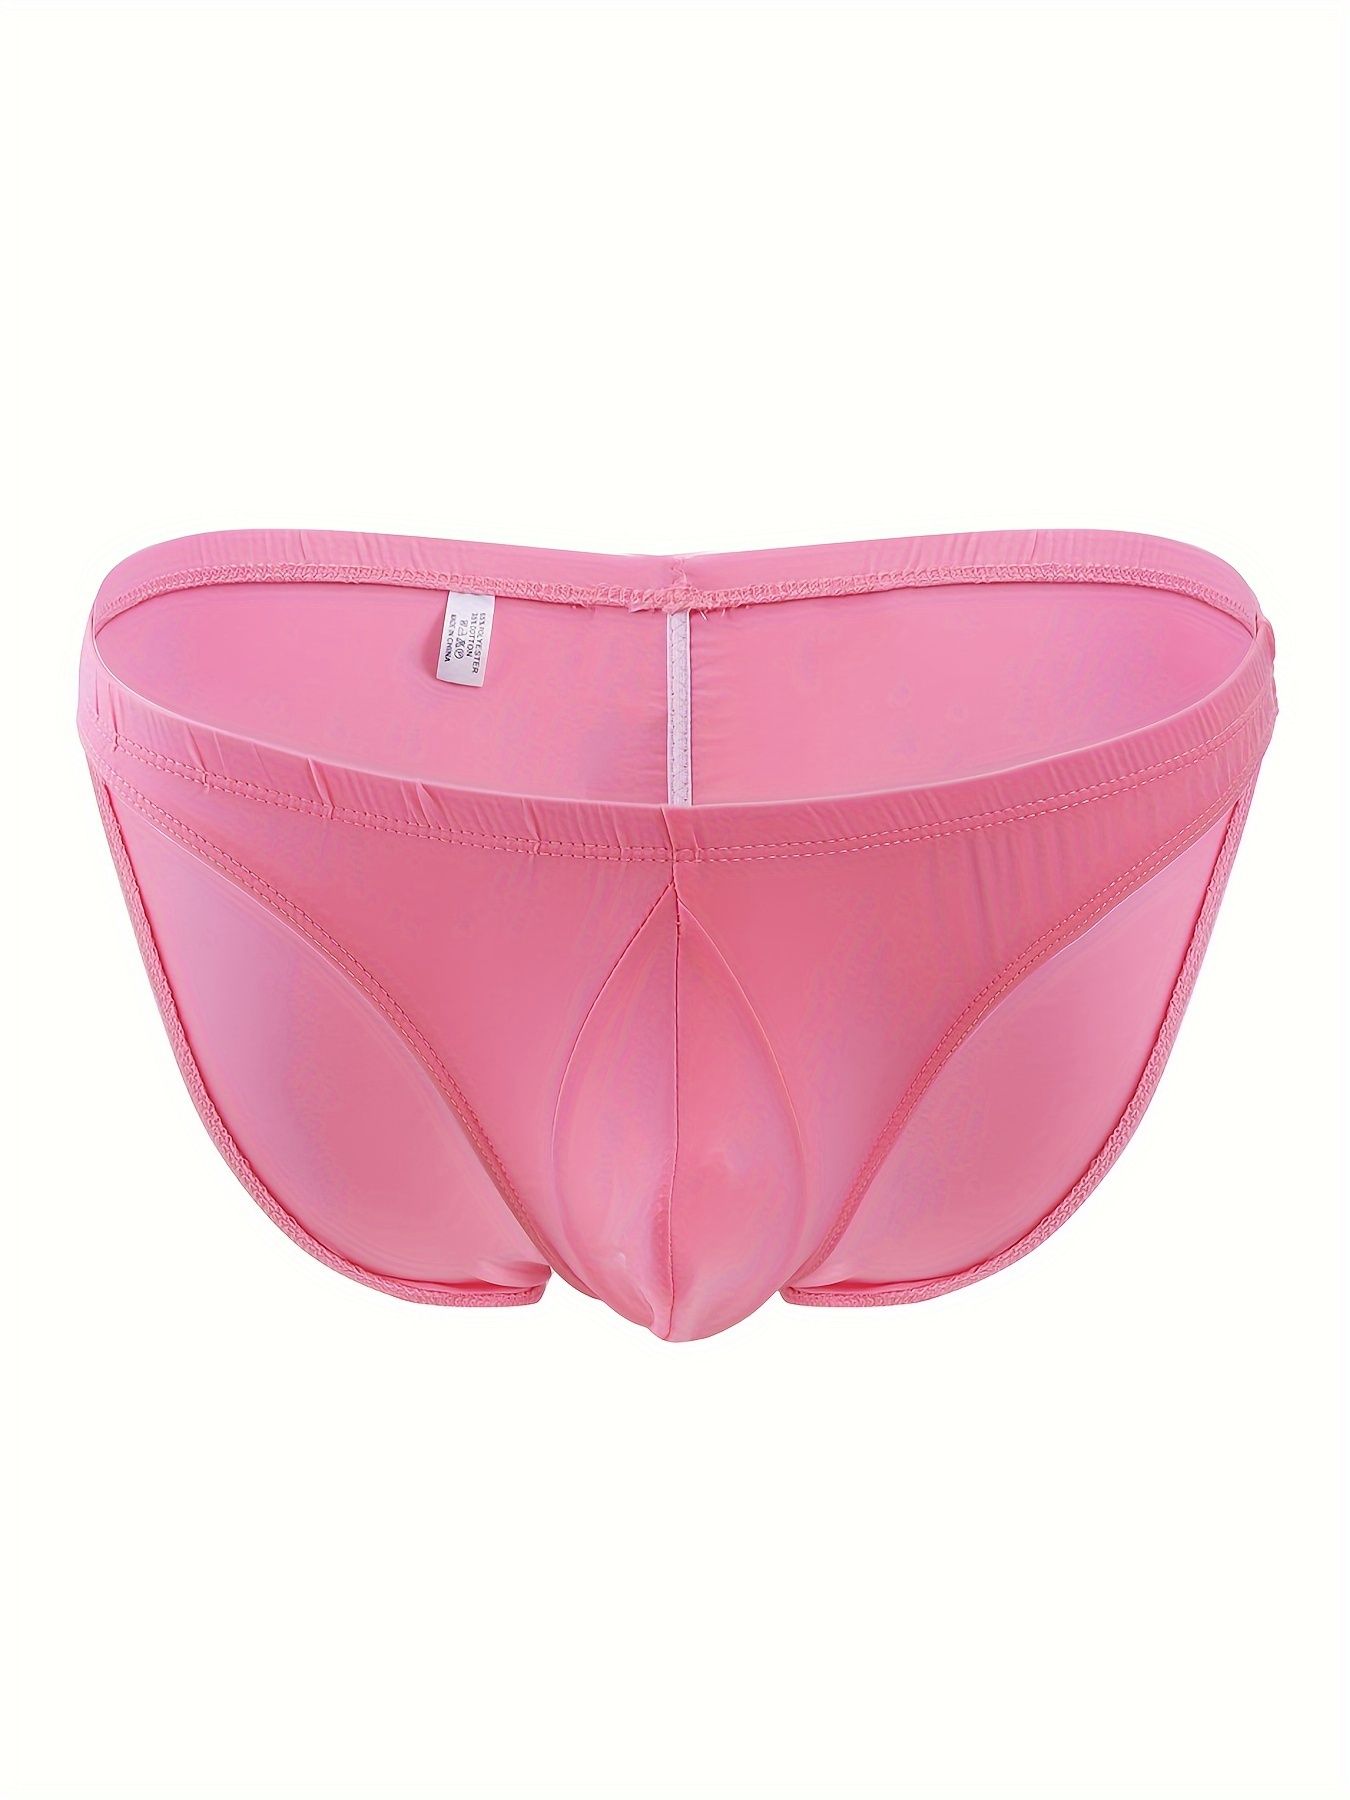 Sponge Pad Underwear Sexy Briefs Enhancer Cup Men Bulge Pouch Front Padded  Underpants Swimwear Panties Pad